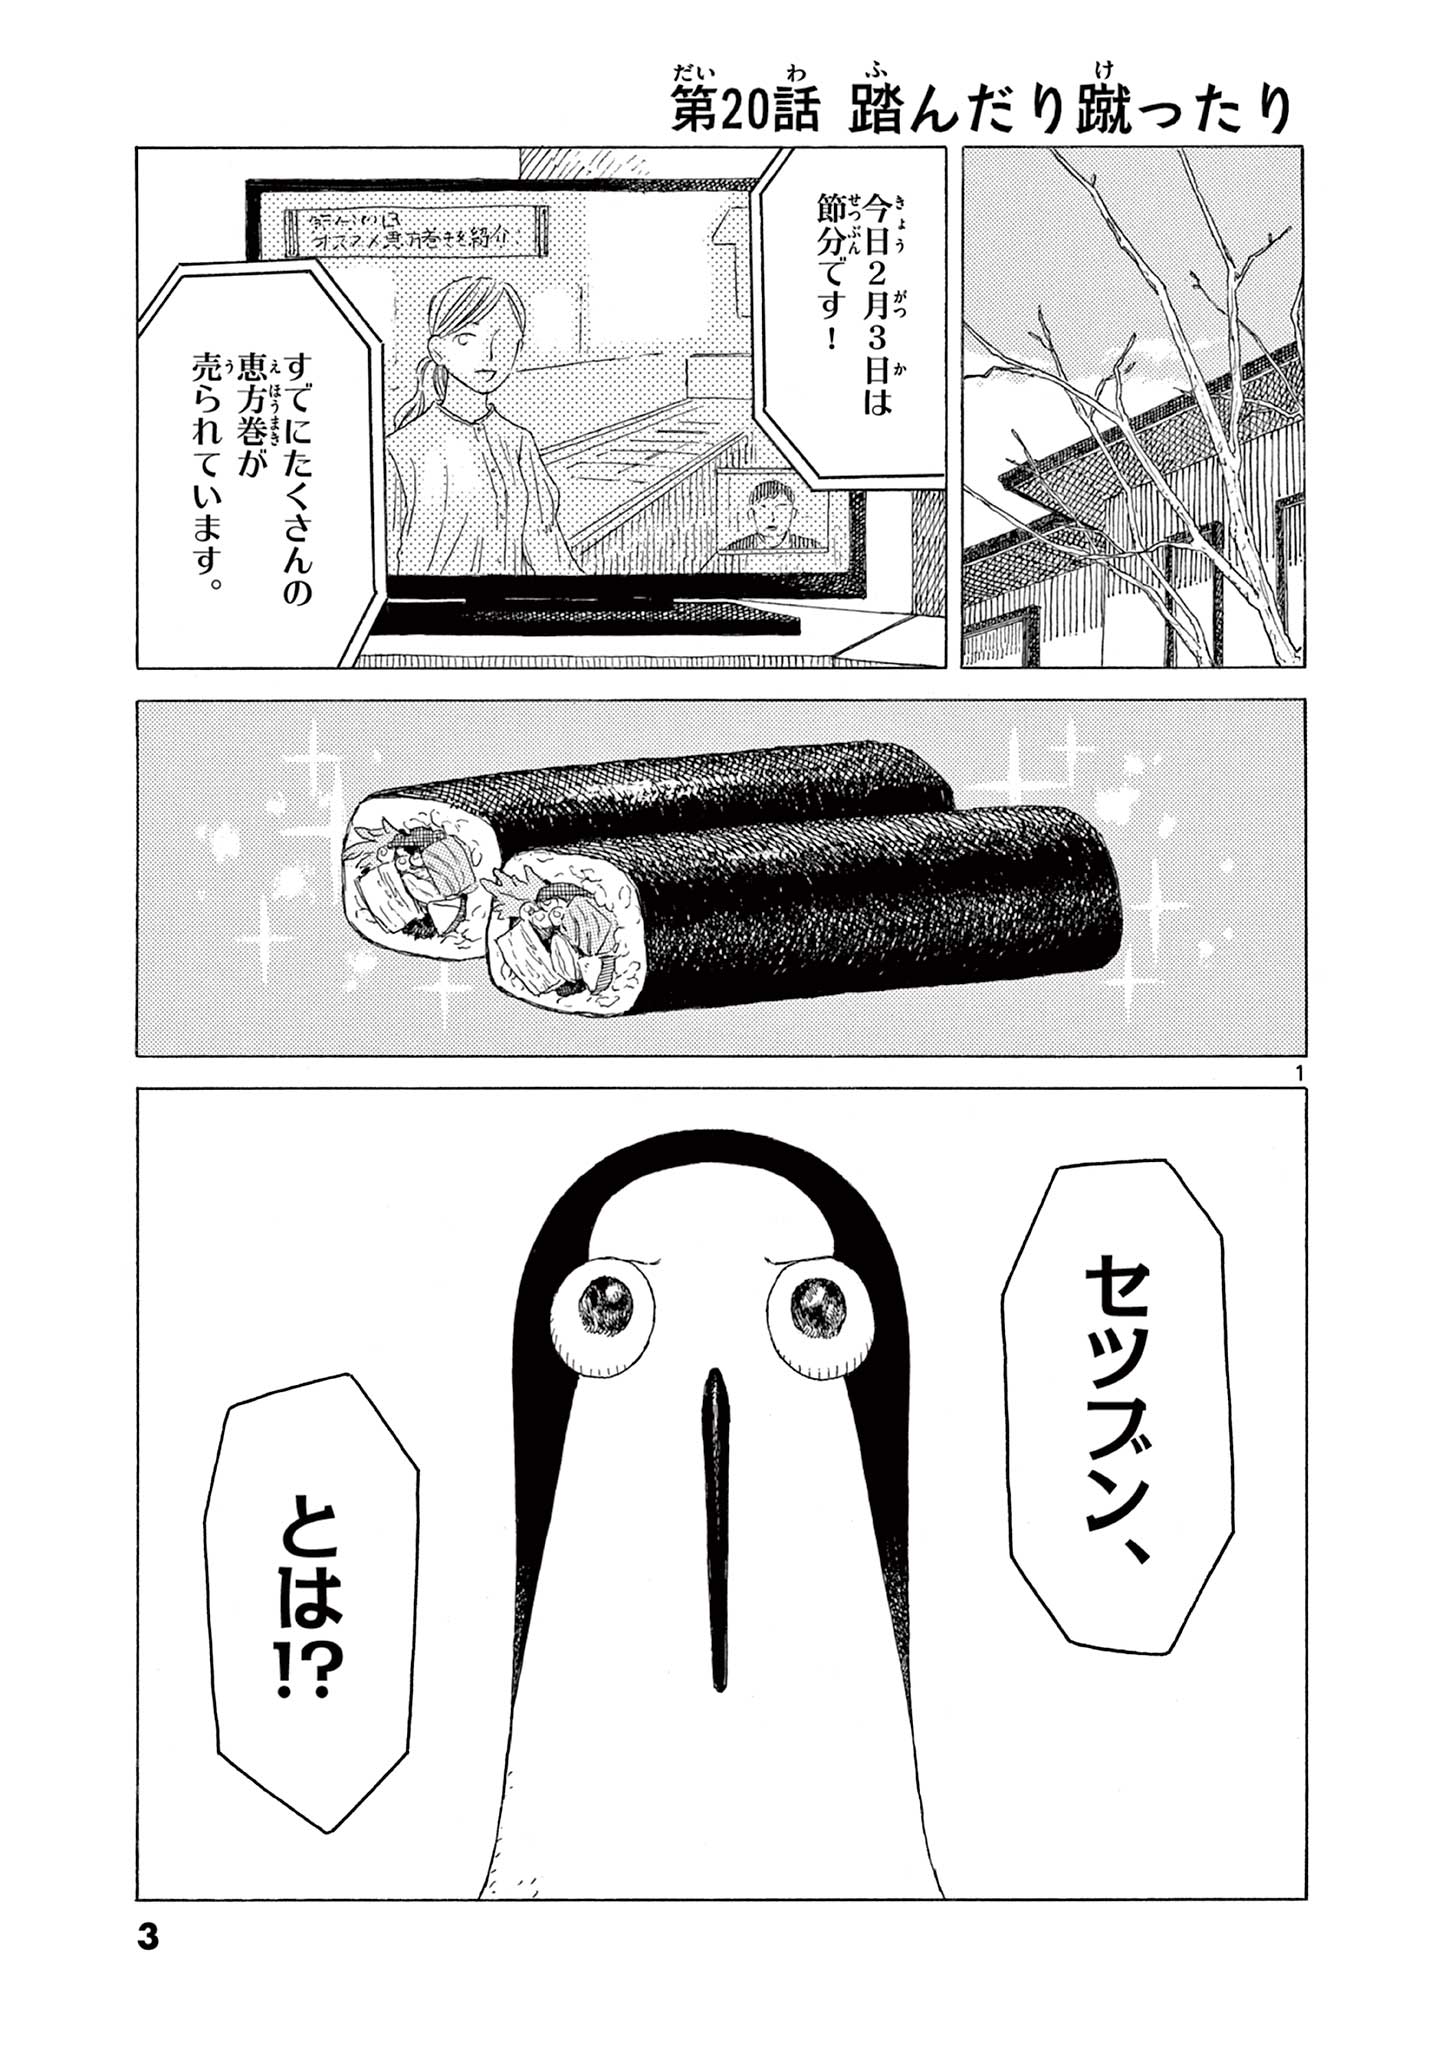 Kujima Utaeba Ie Hororo - Chapter 20 - Page 1